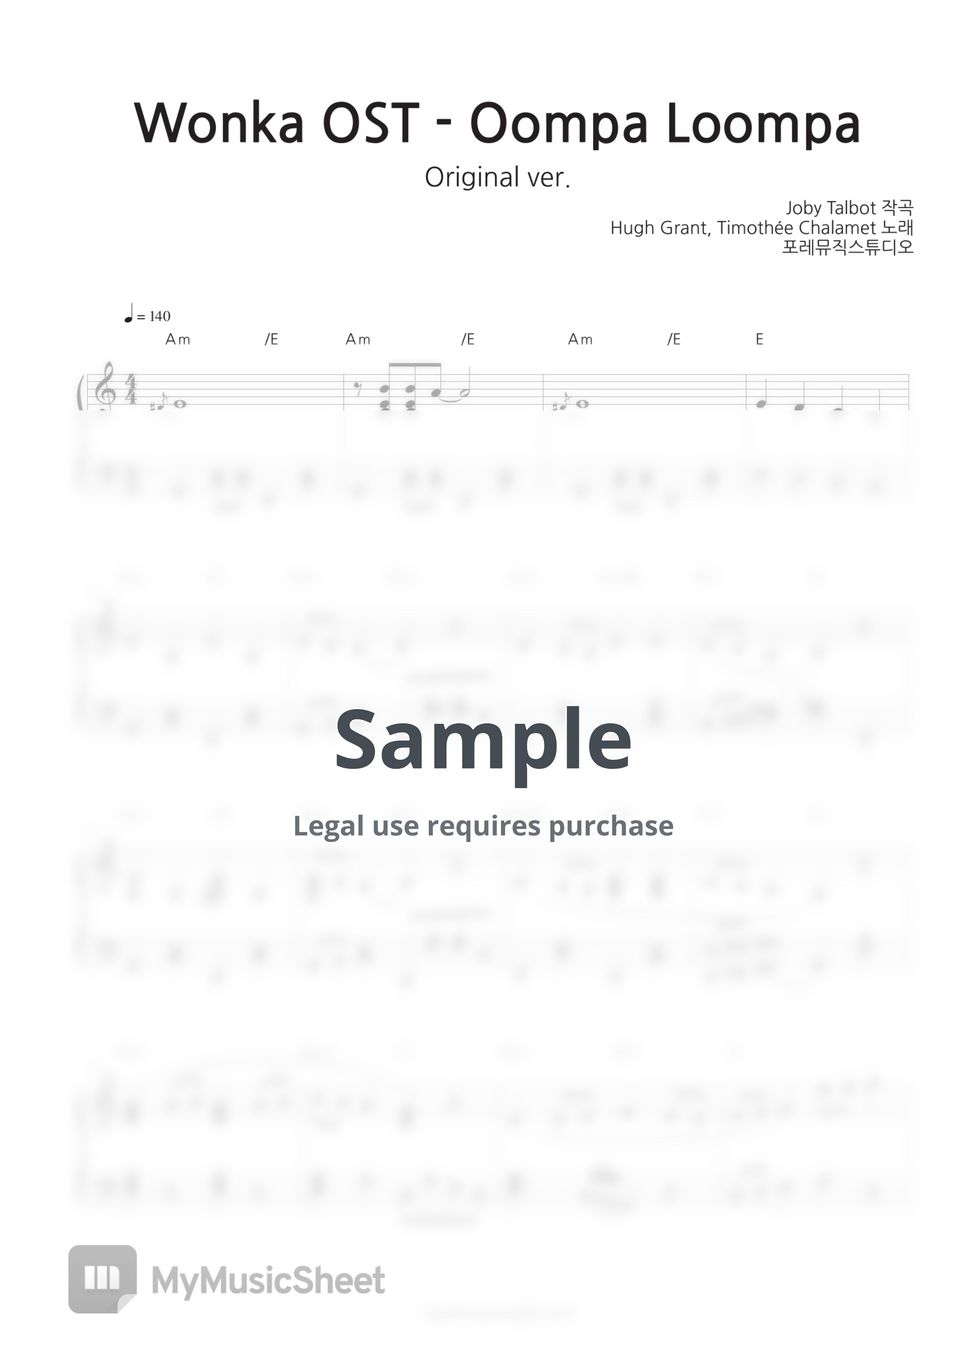 Hugh Grant, Timotheé Chalamet - Oompa-Loompa (Wonka OST) by Faure music studio